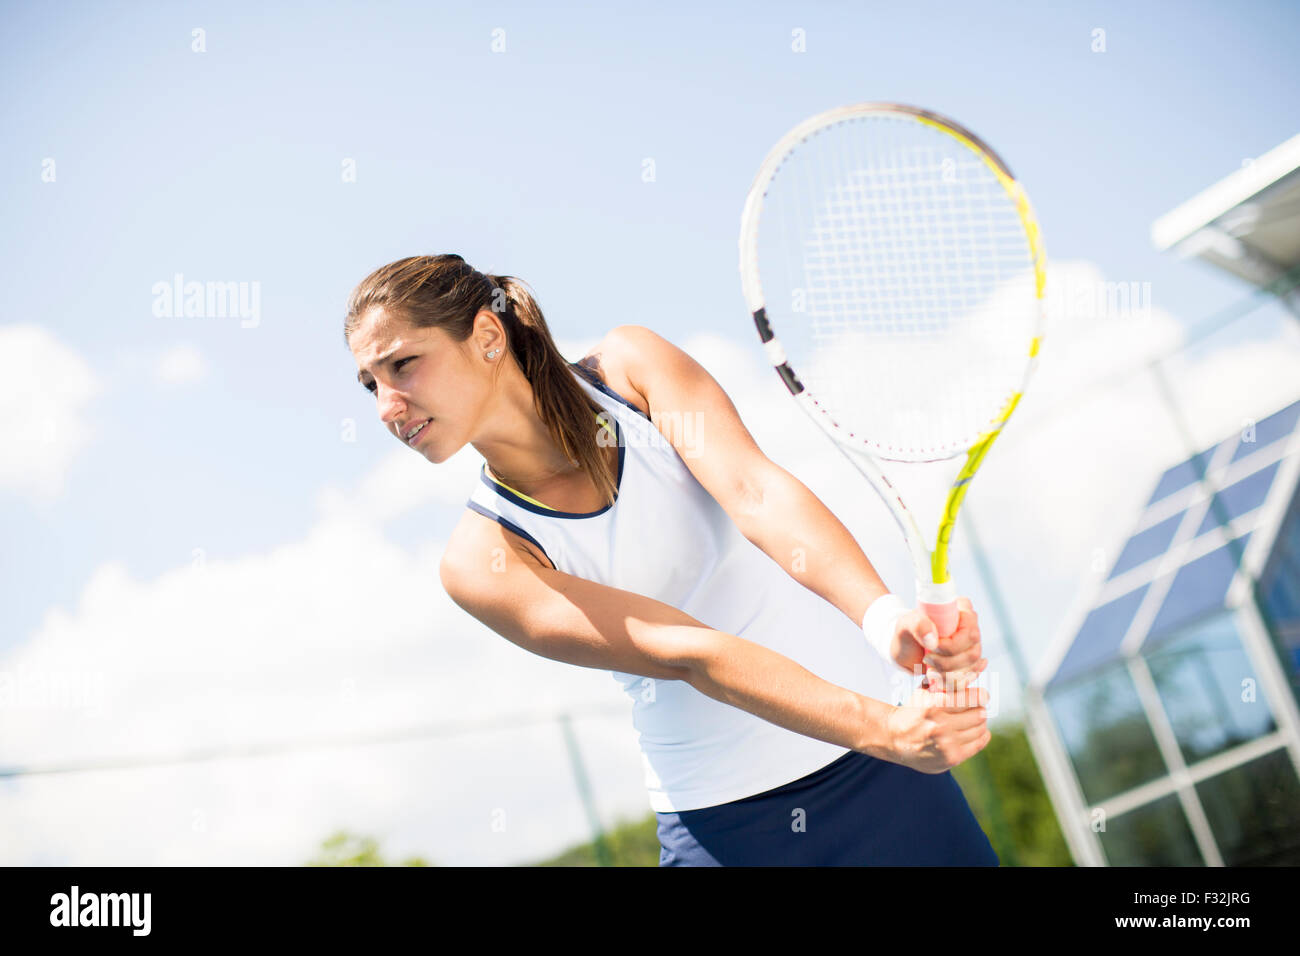 Chica jugando tenis Foto de stock